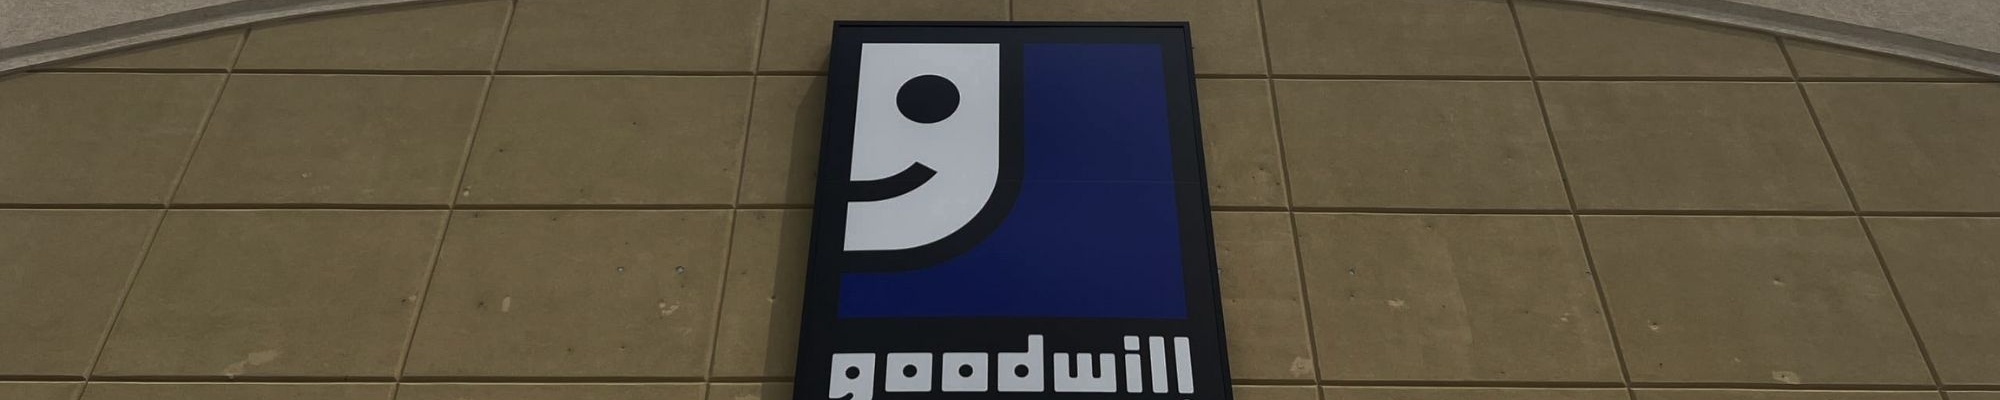 Goodwill Building